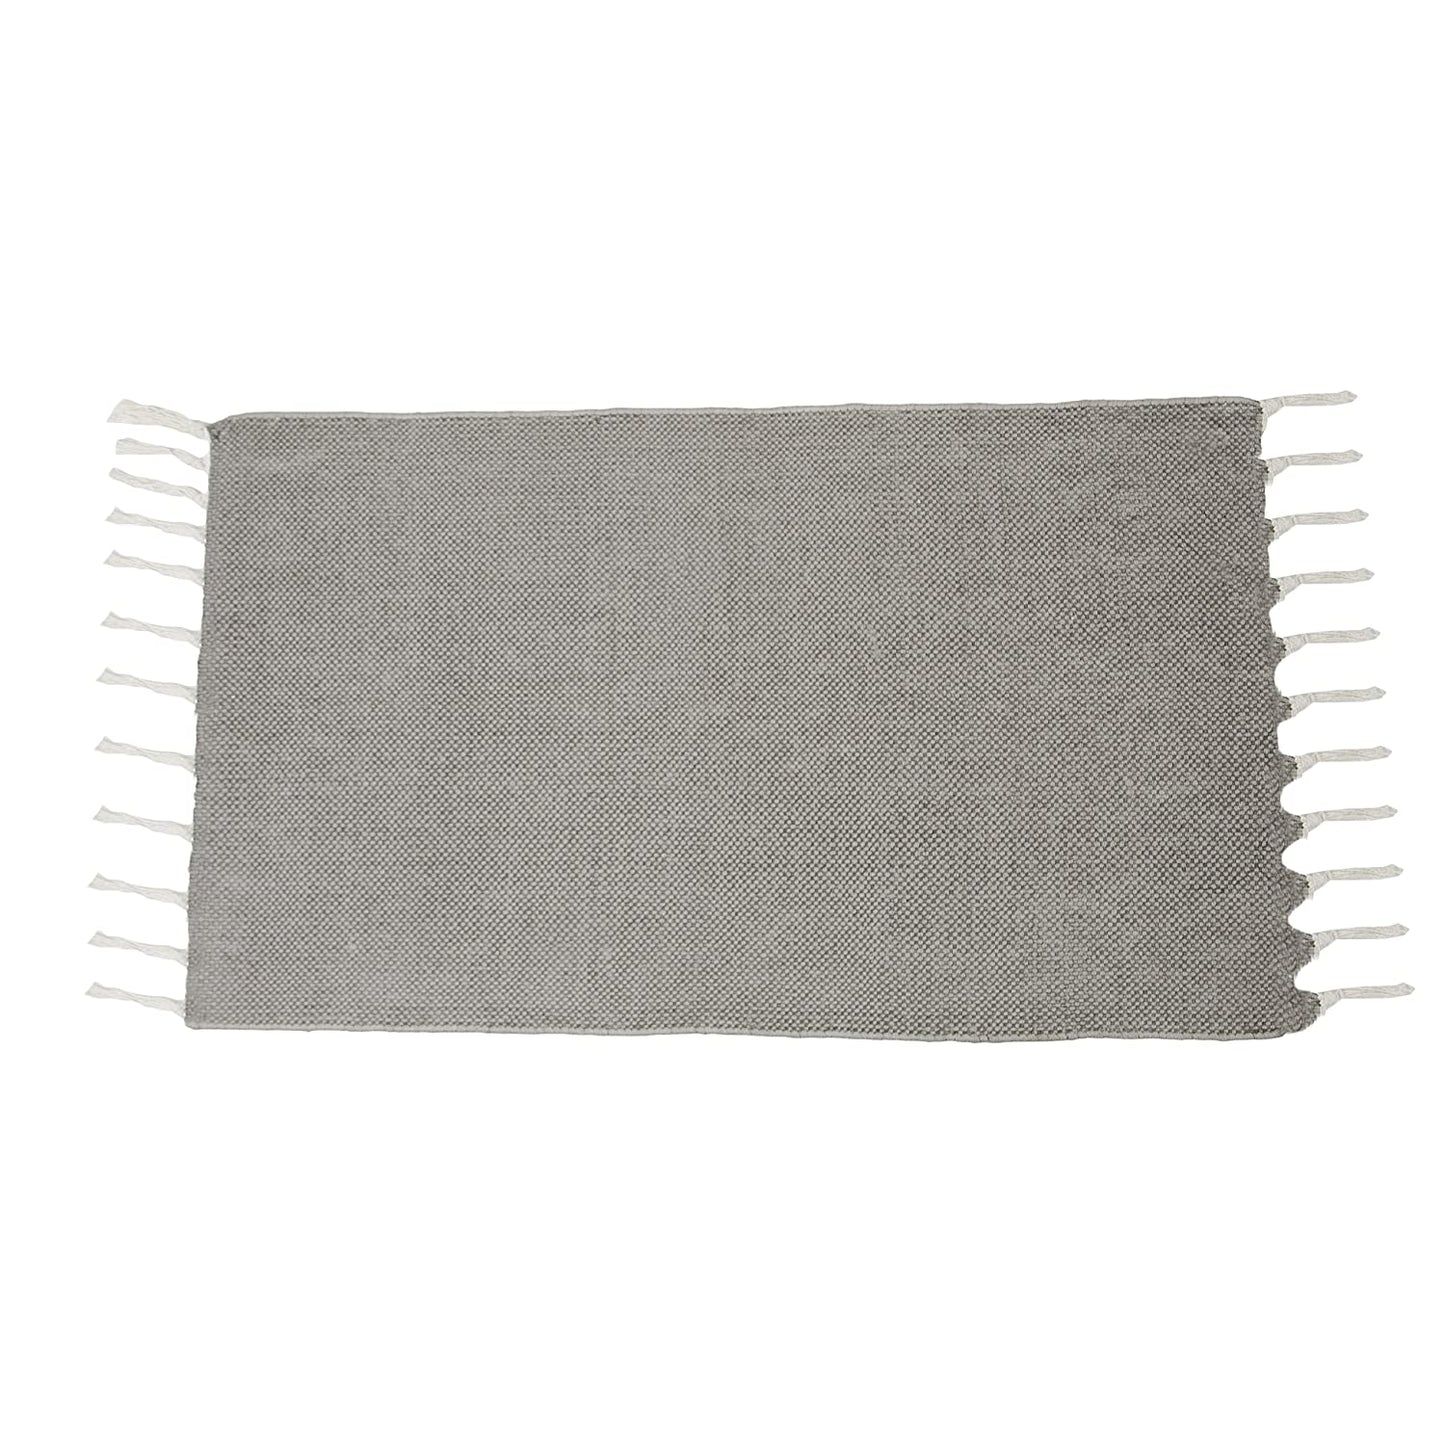 SWHF Cotton Solid Rug: 18 X 30 Inch (Grey)